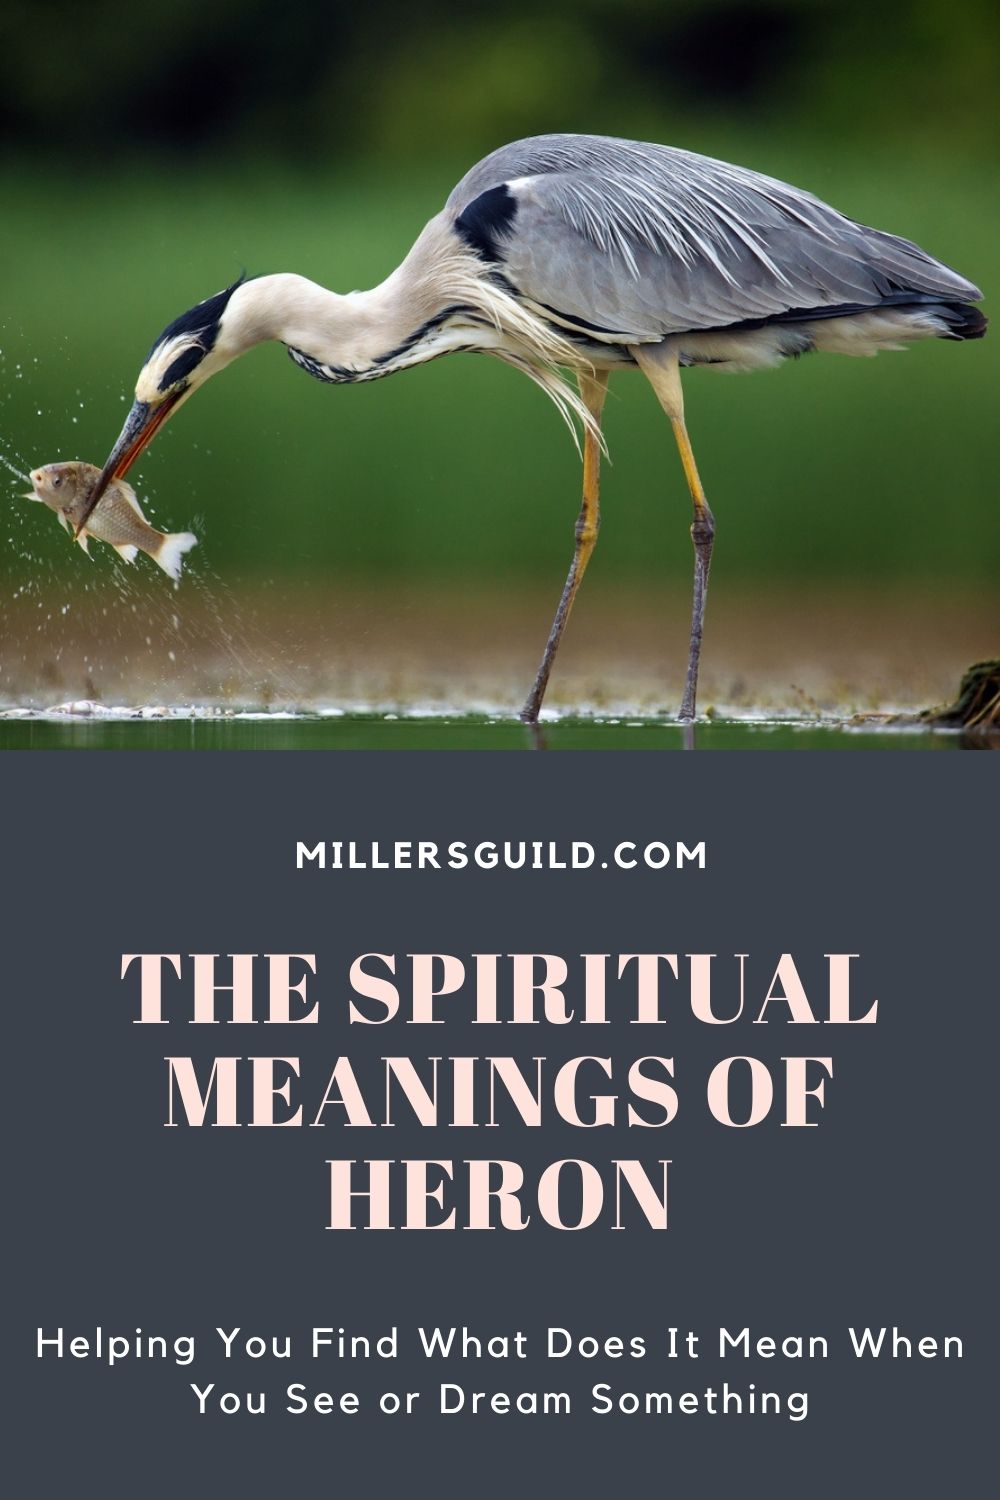 The Spiritual Meanings of Heron